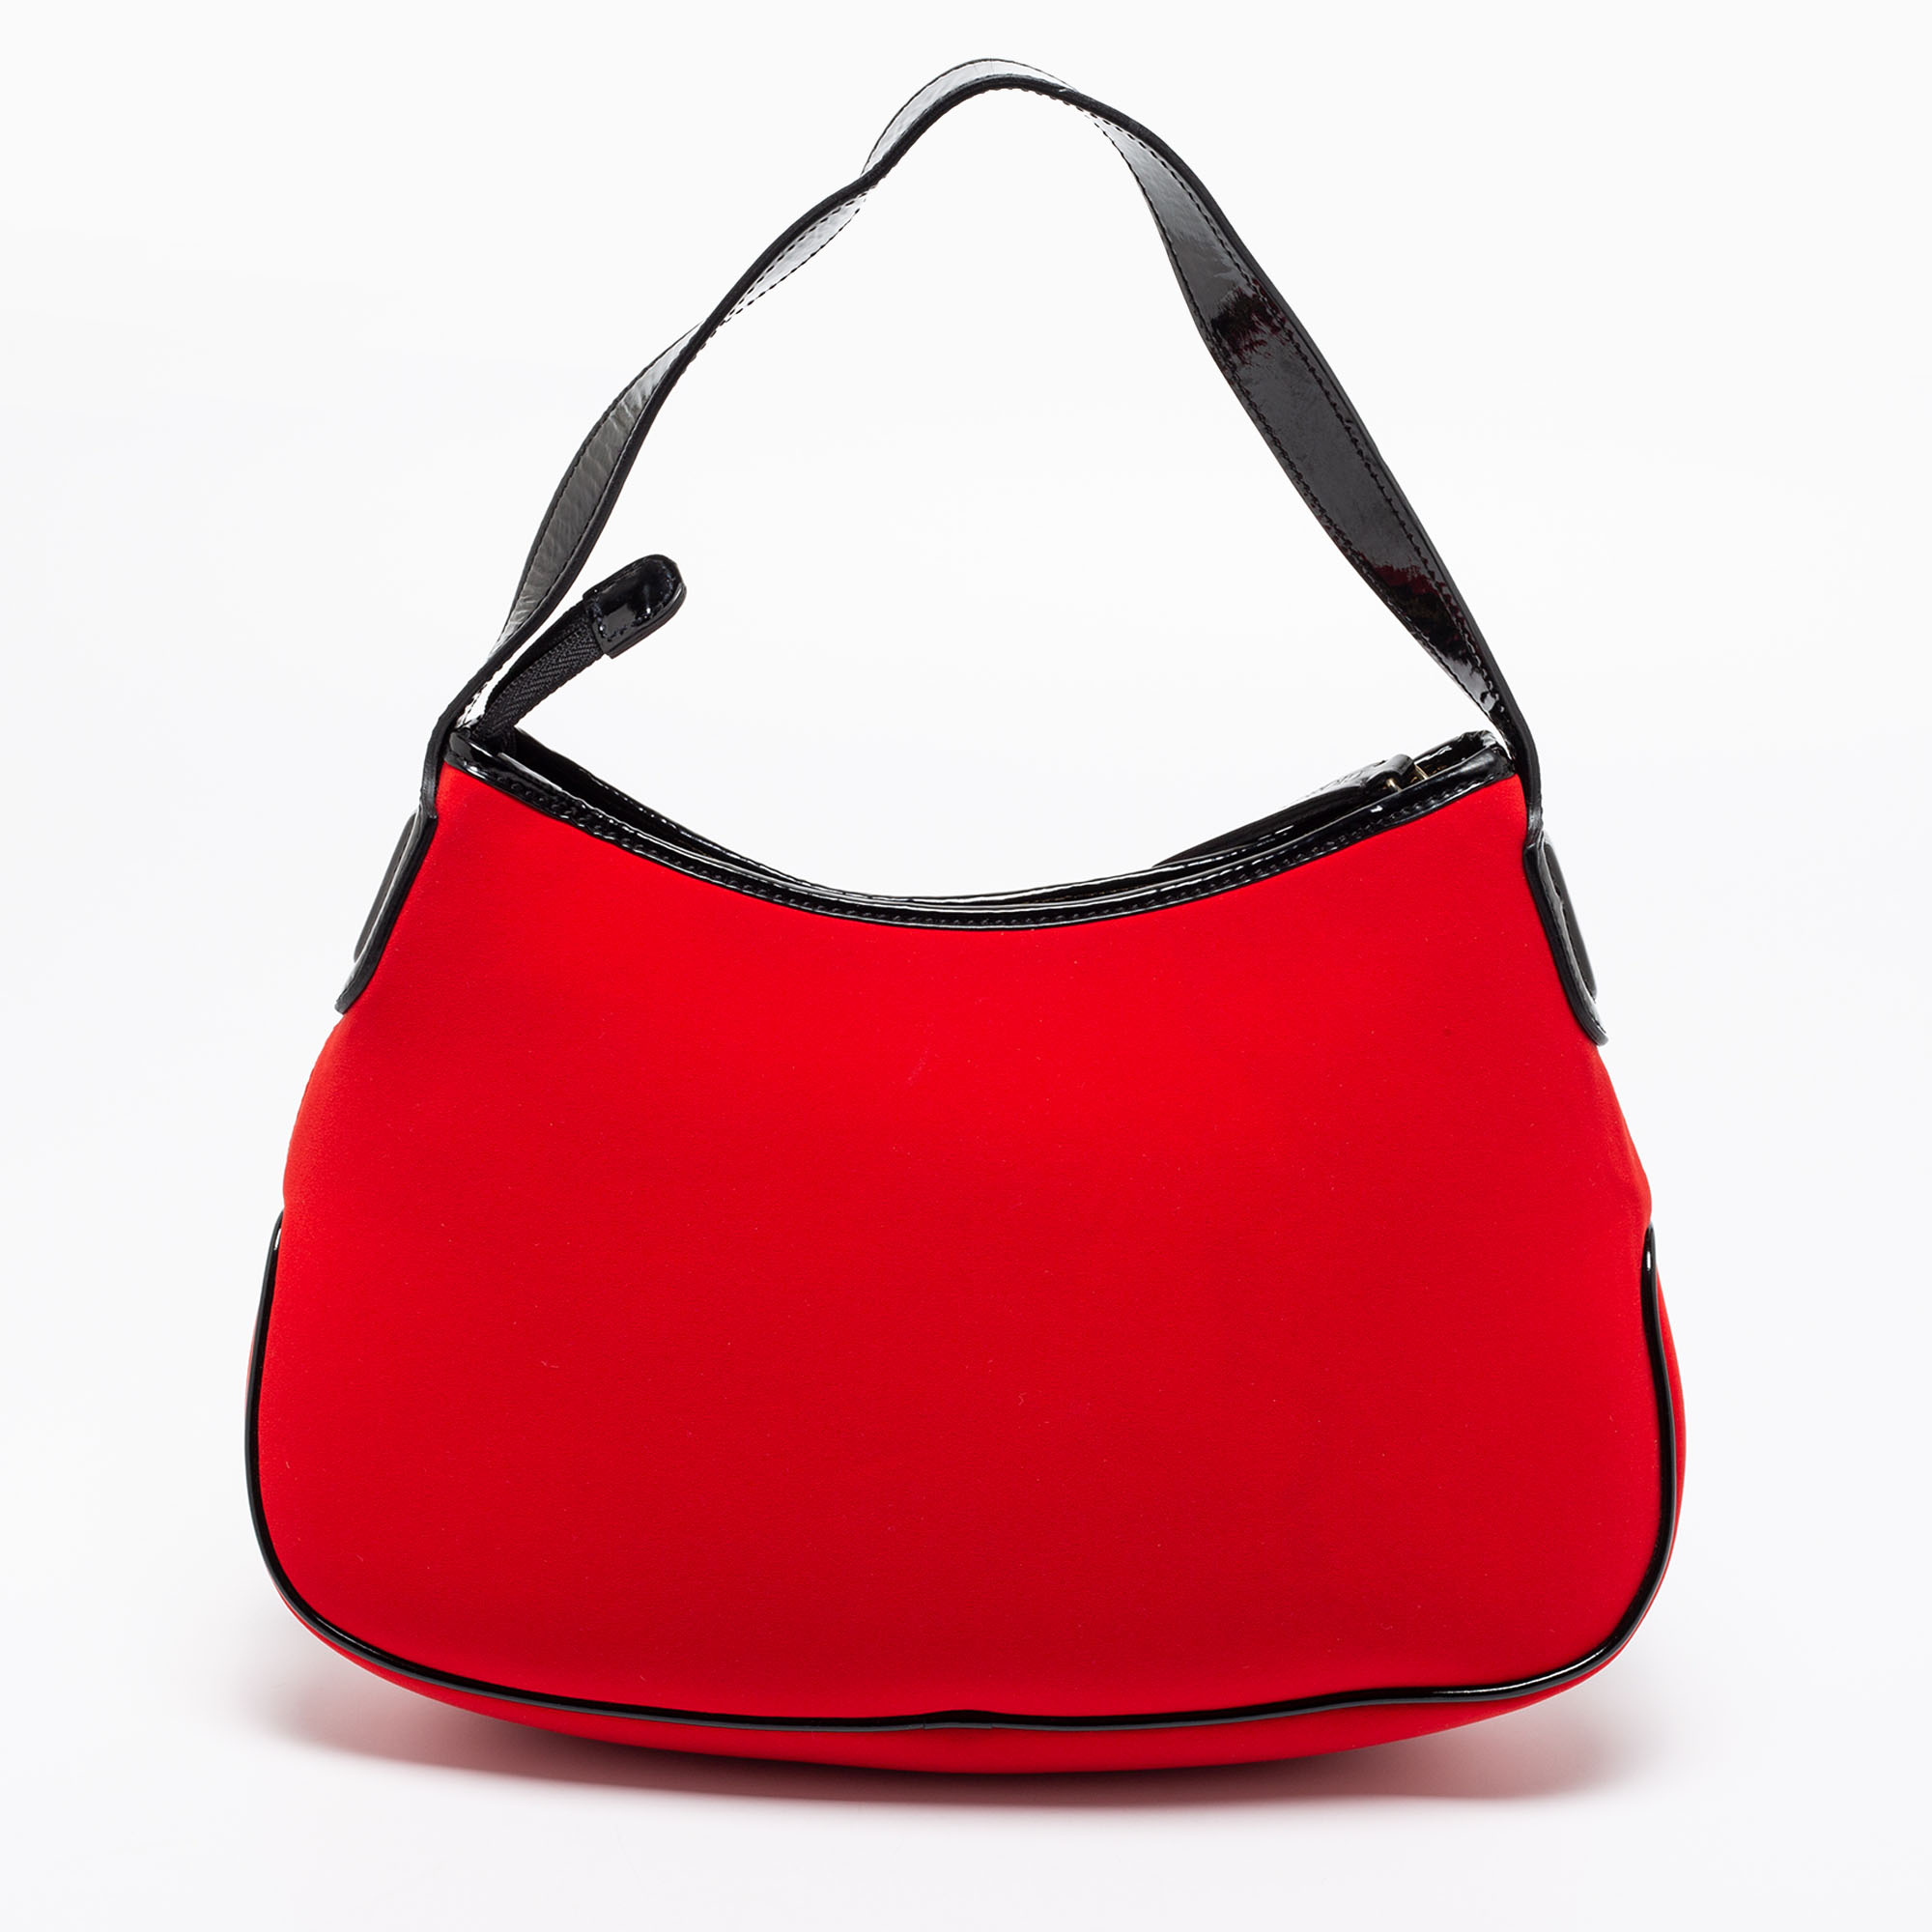 Giorgio Armani Red Neoprene And Patent Leather Hobo Bag